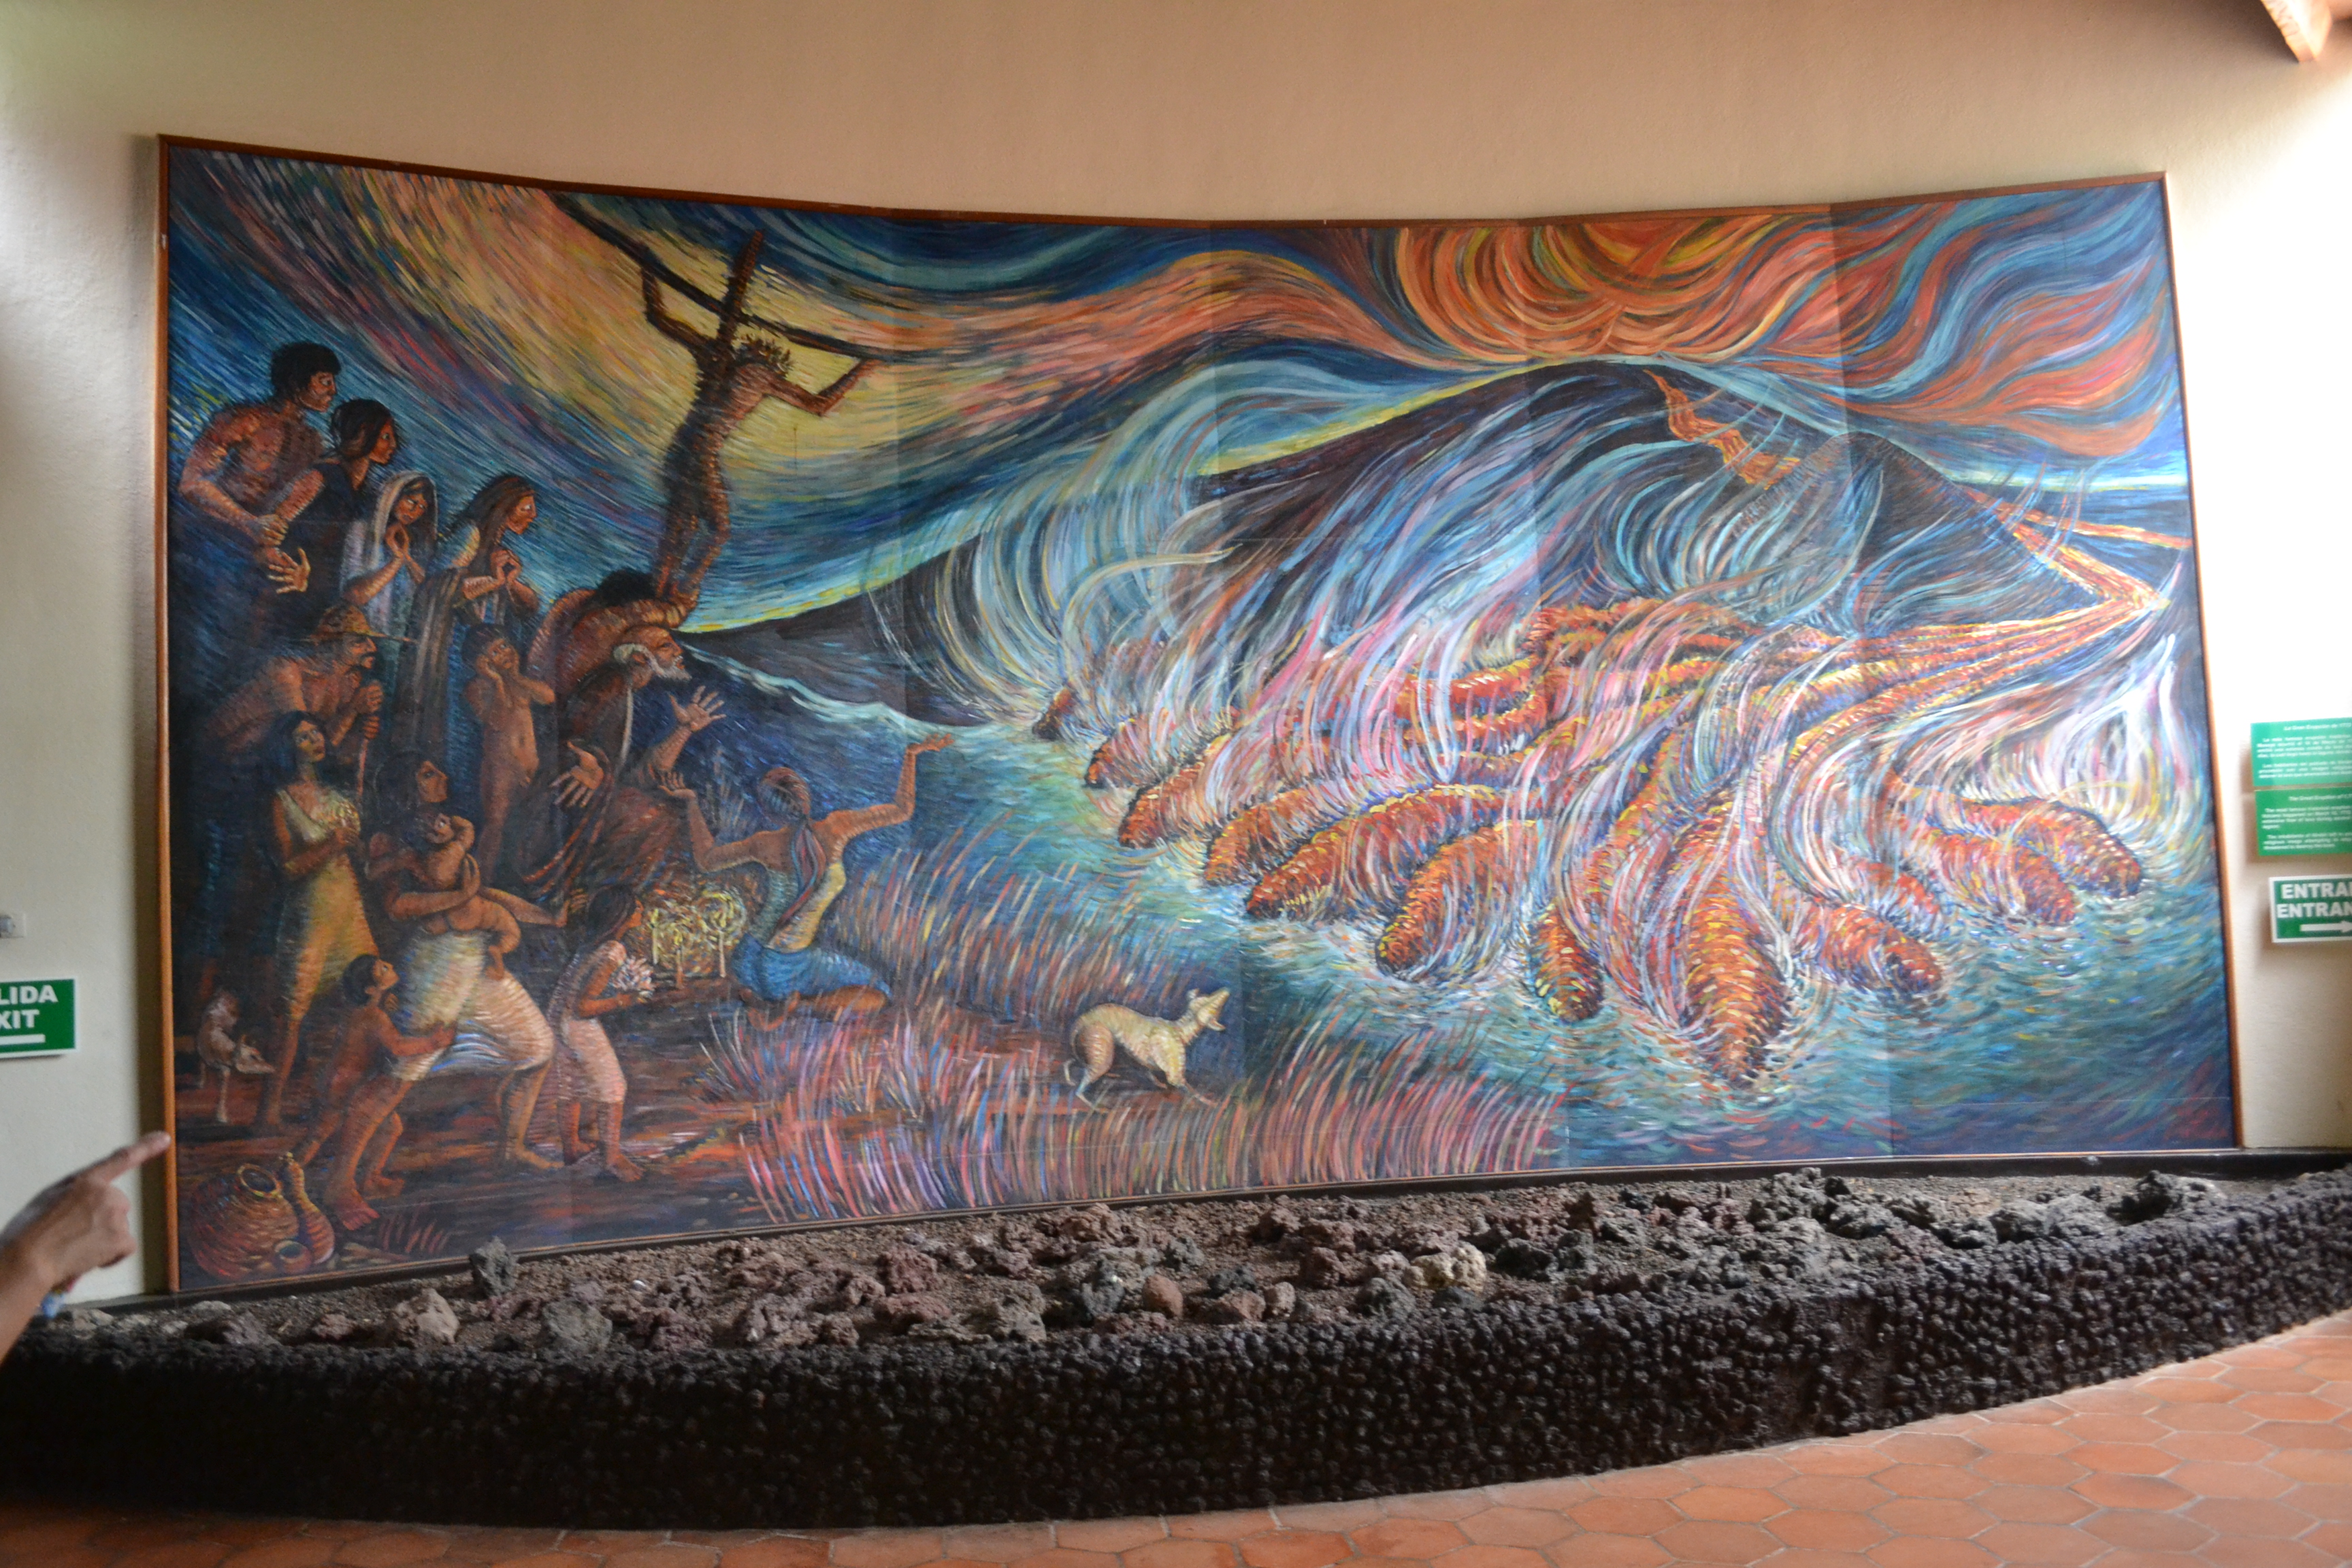 Foto: Museo del volcán Masaya (o Popogatepe) - Masaya, Nicaragua